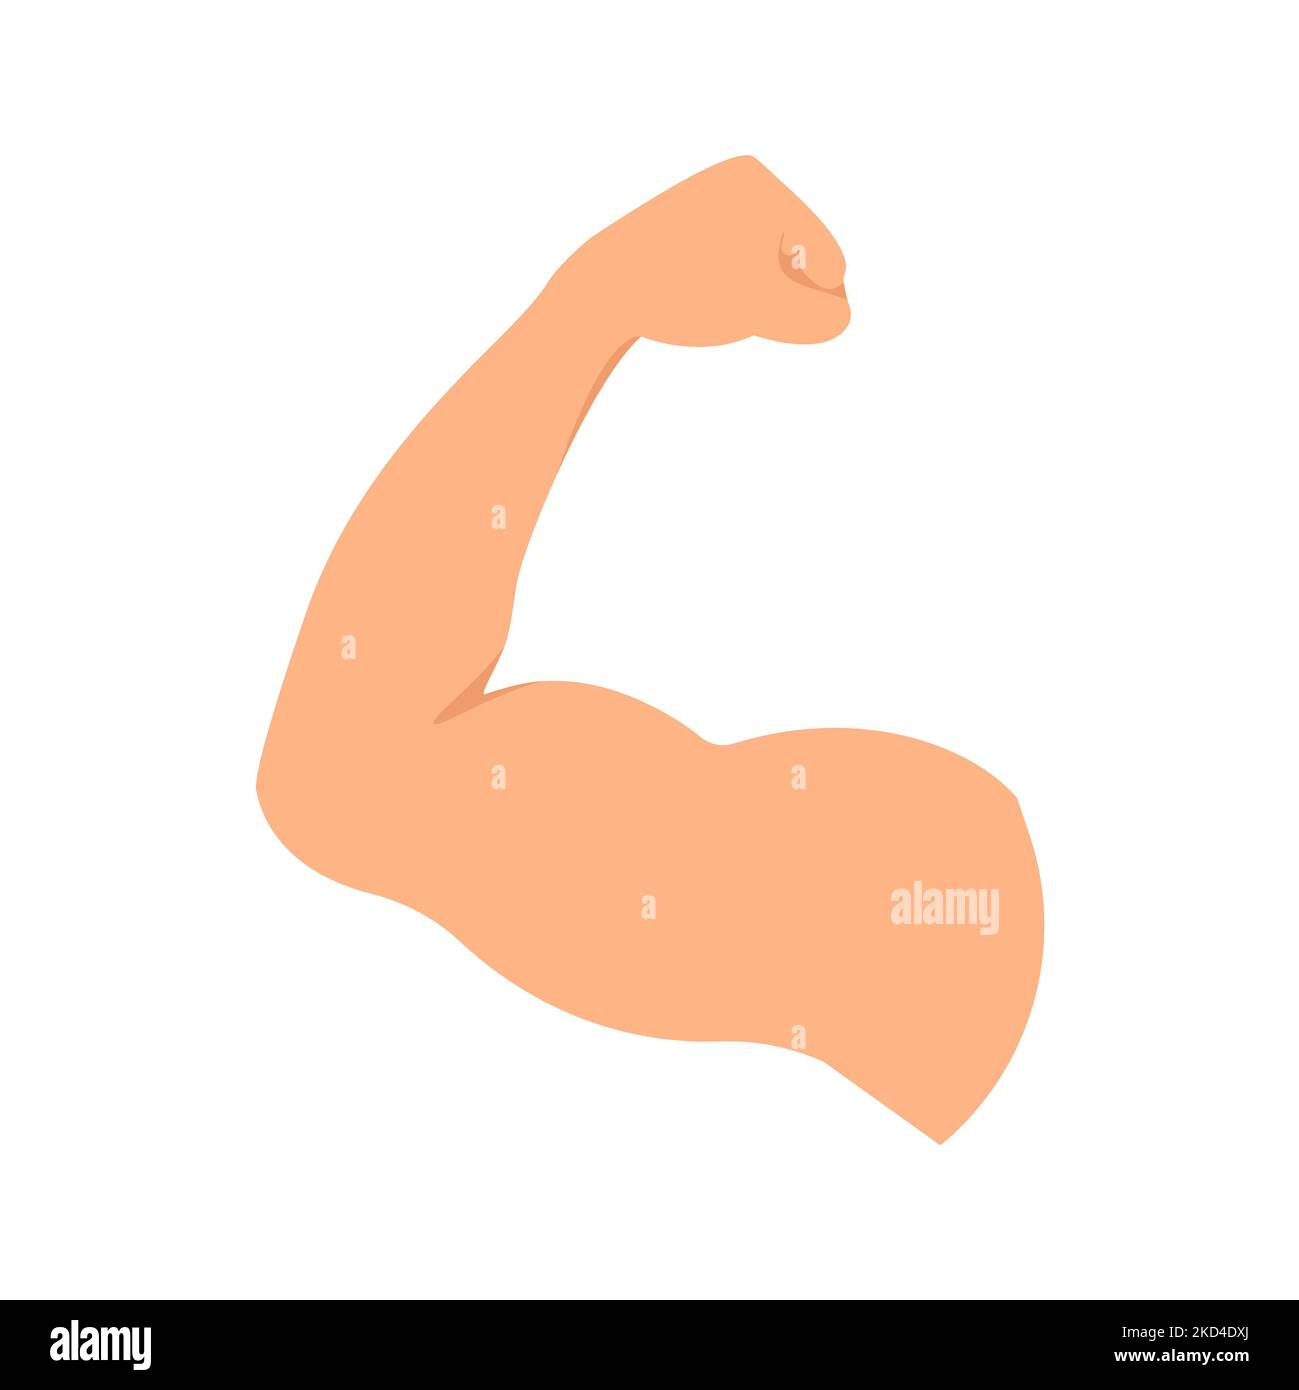 Muscle, illustration Banque D'Images